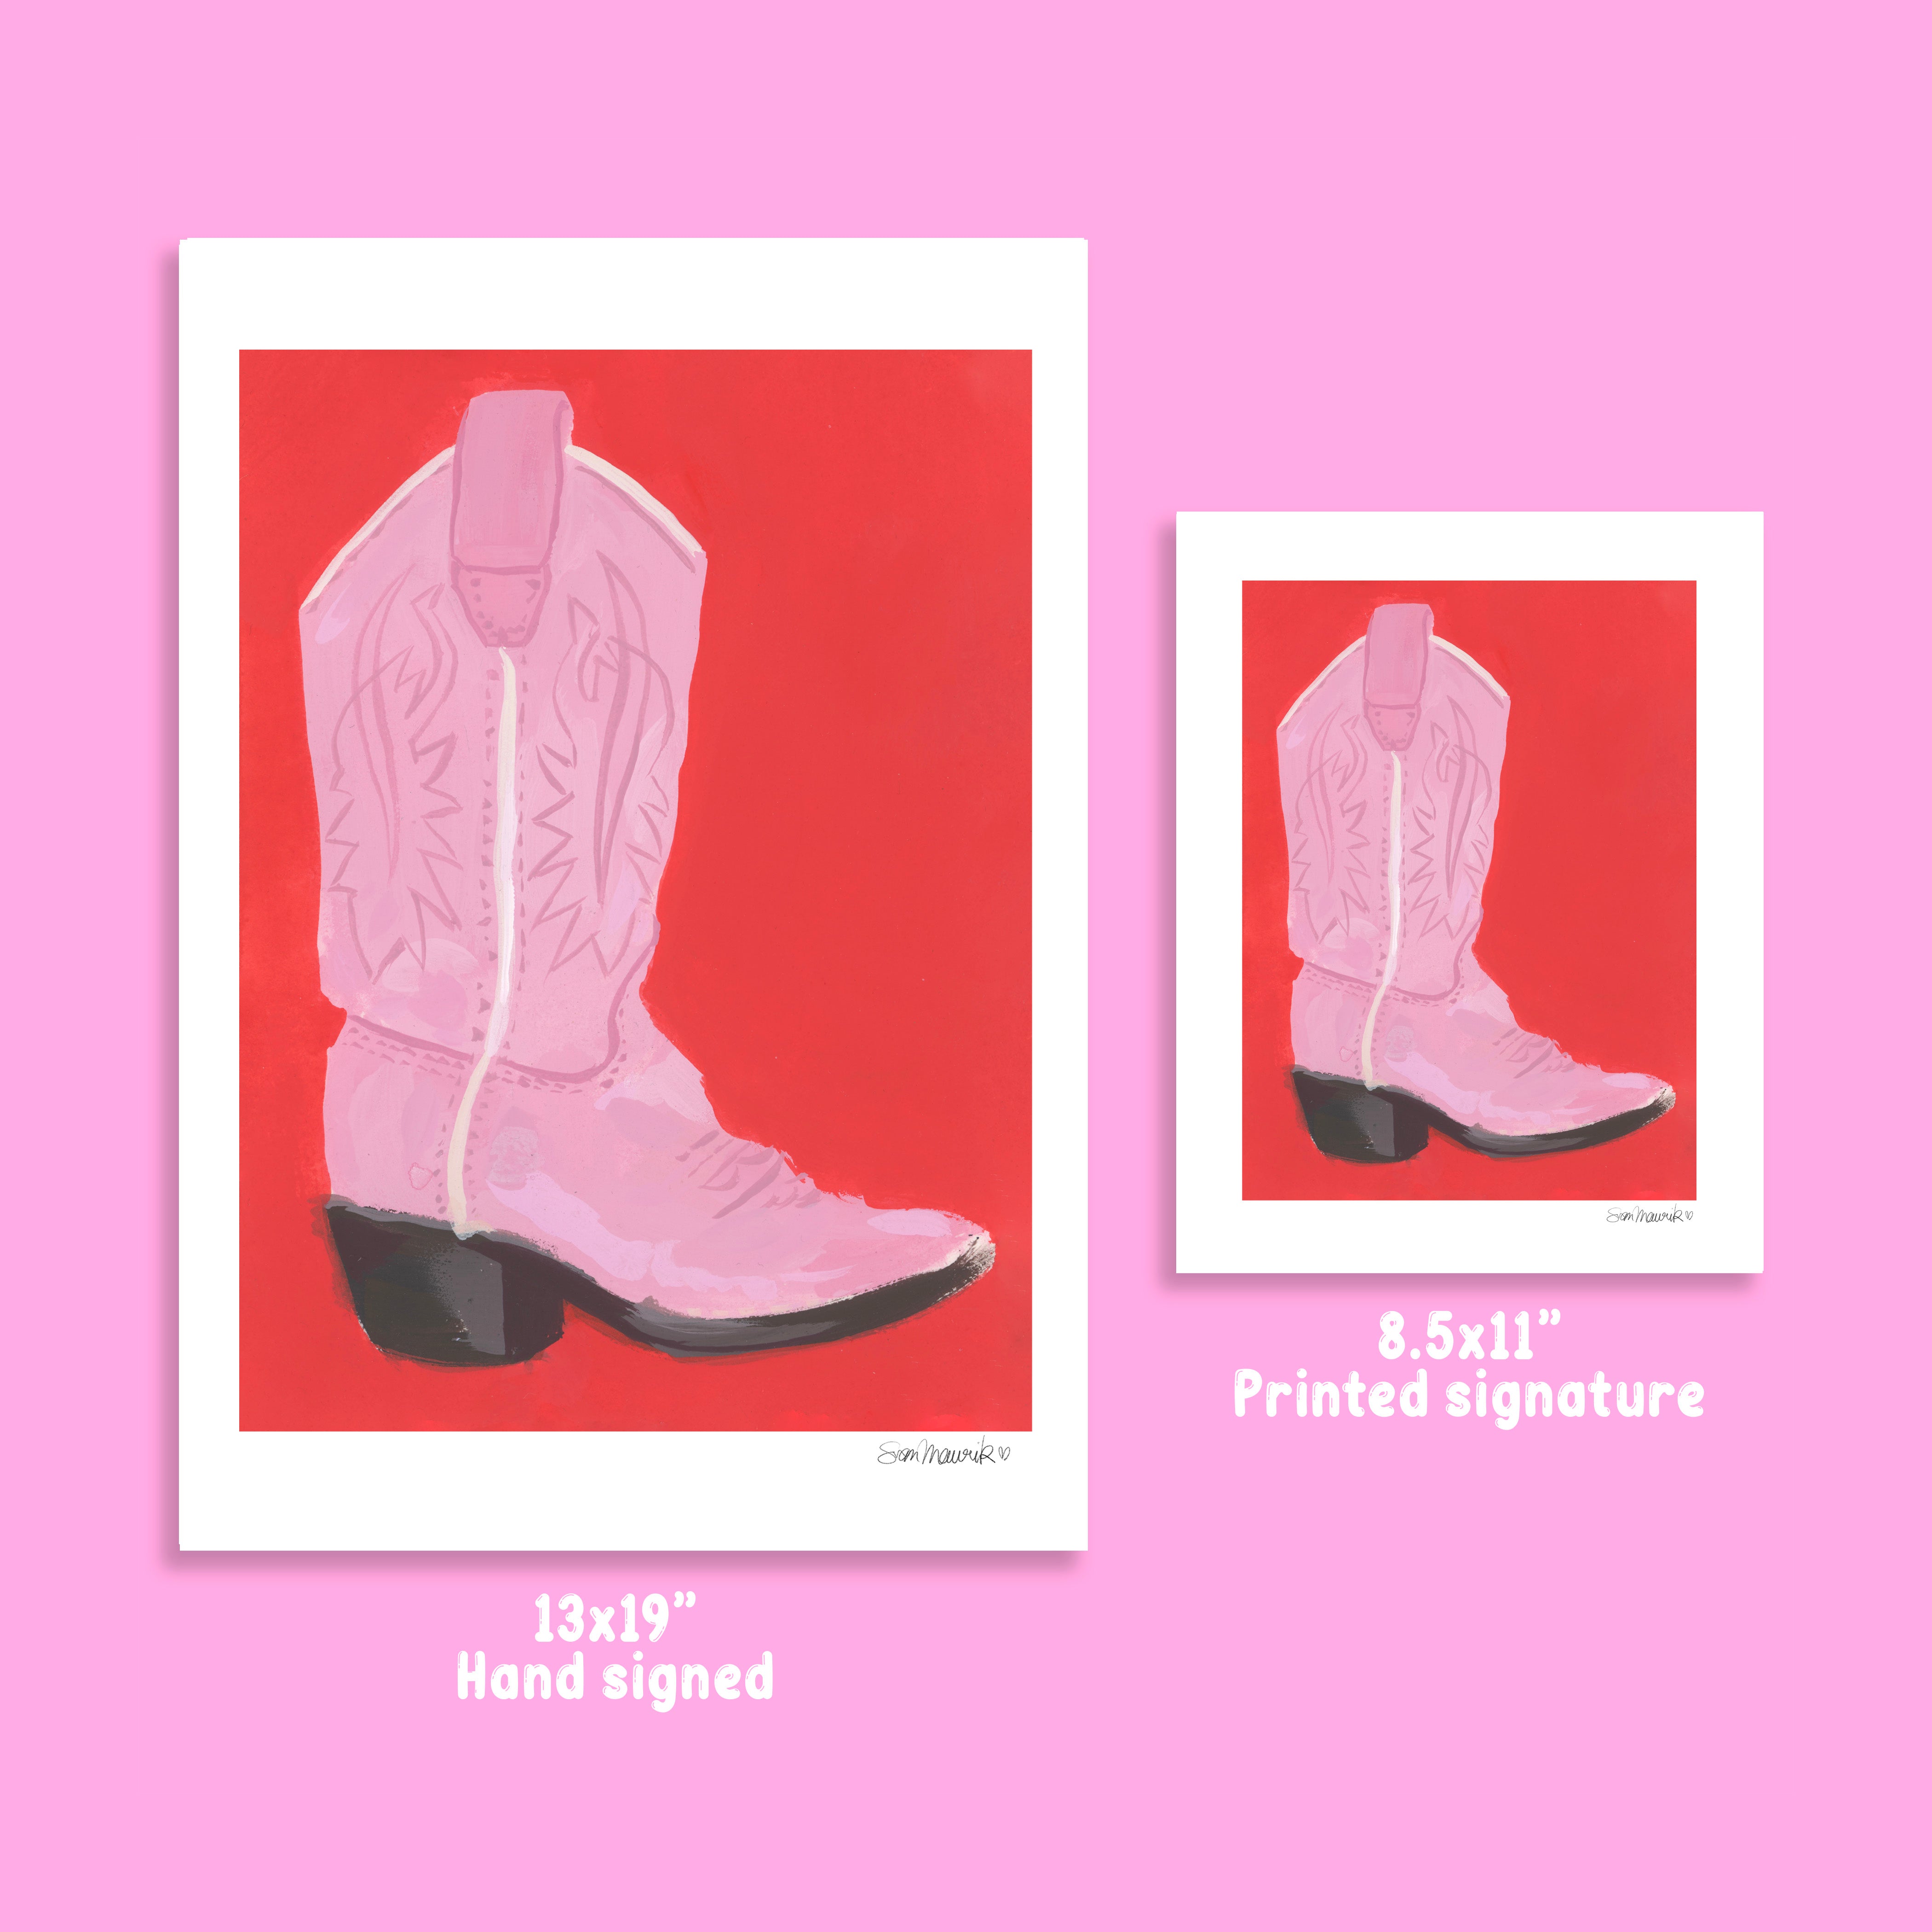 Cowboy Boot Art Print